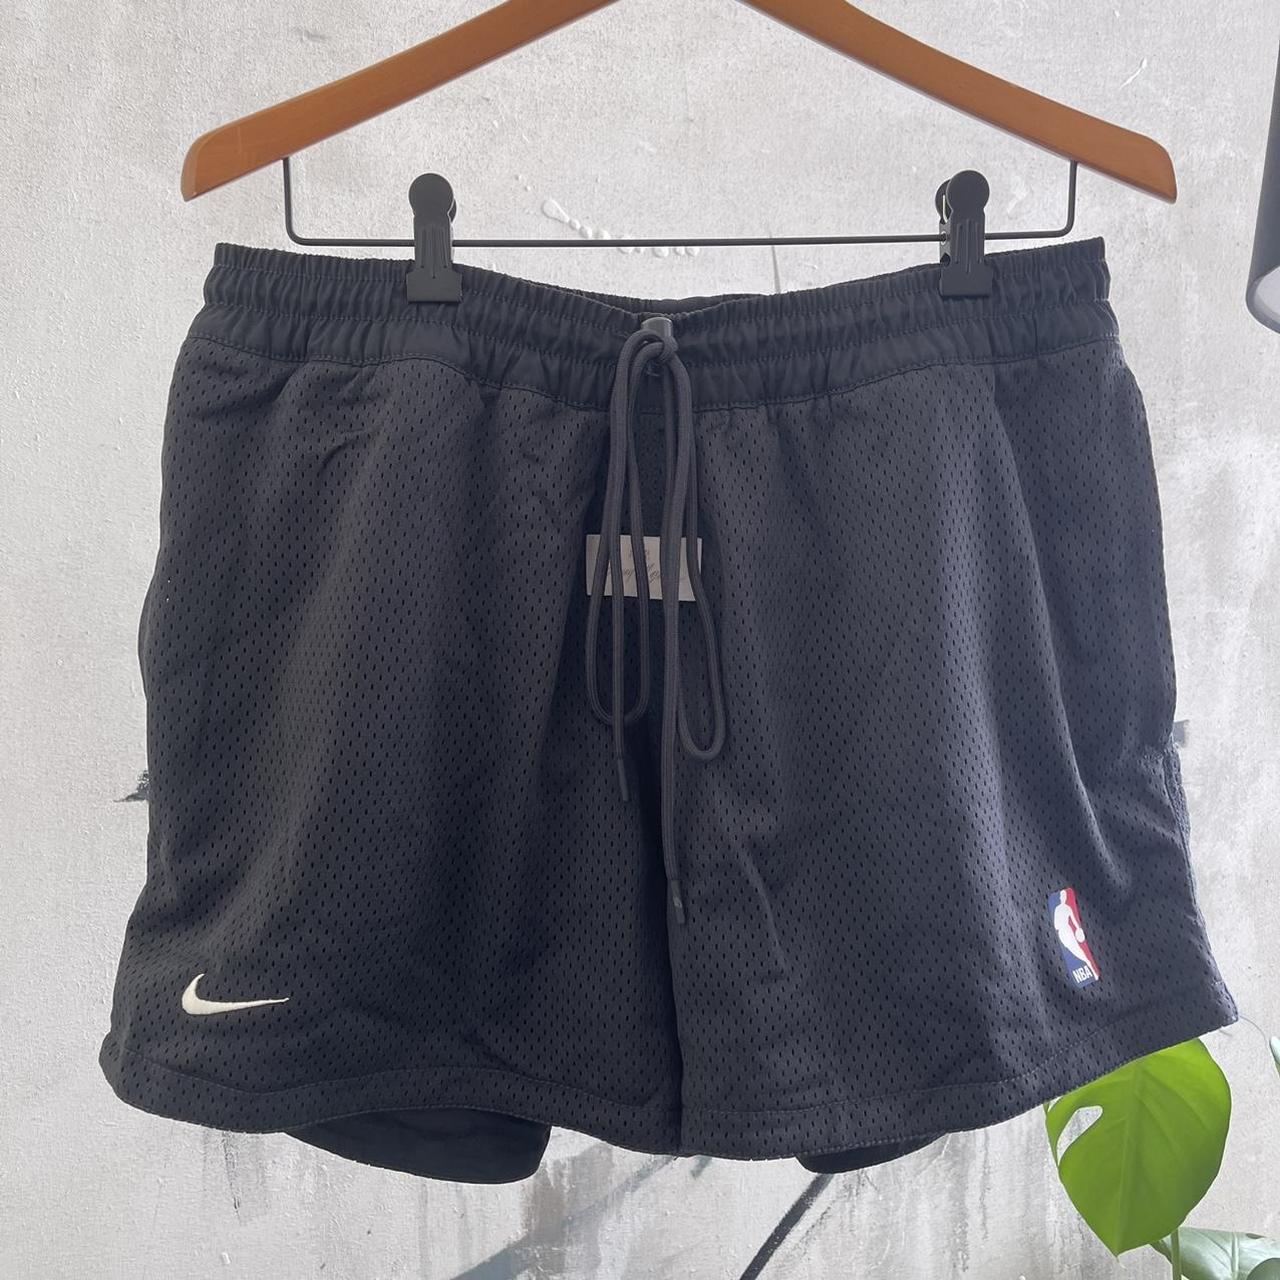 Nike x Fear of God NBA Basketball Shorts, Size L, New...